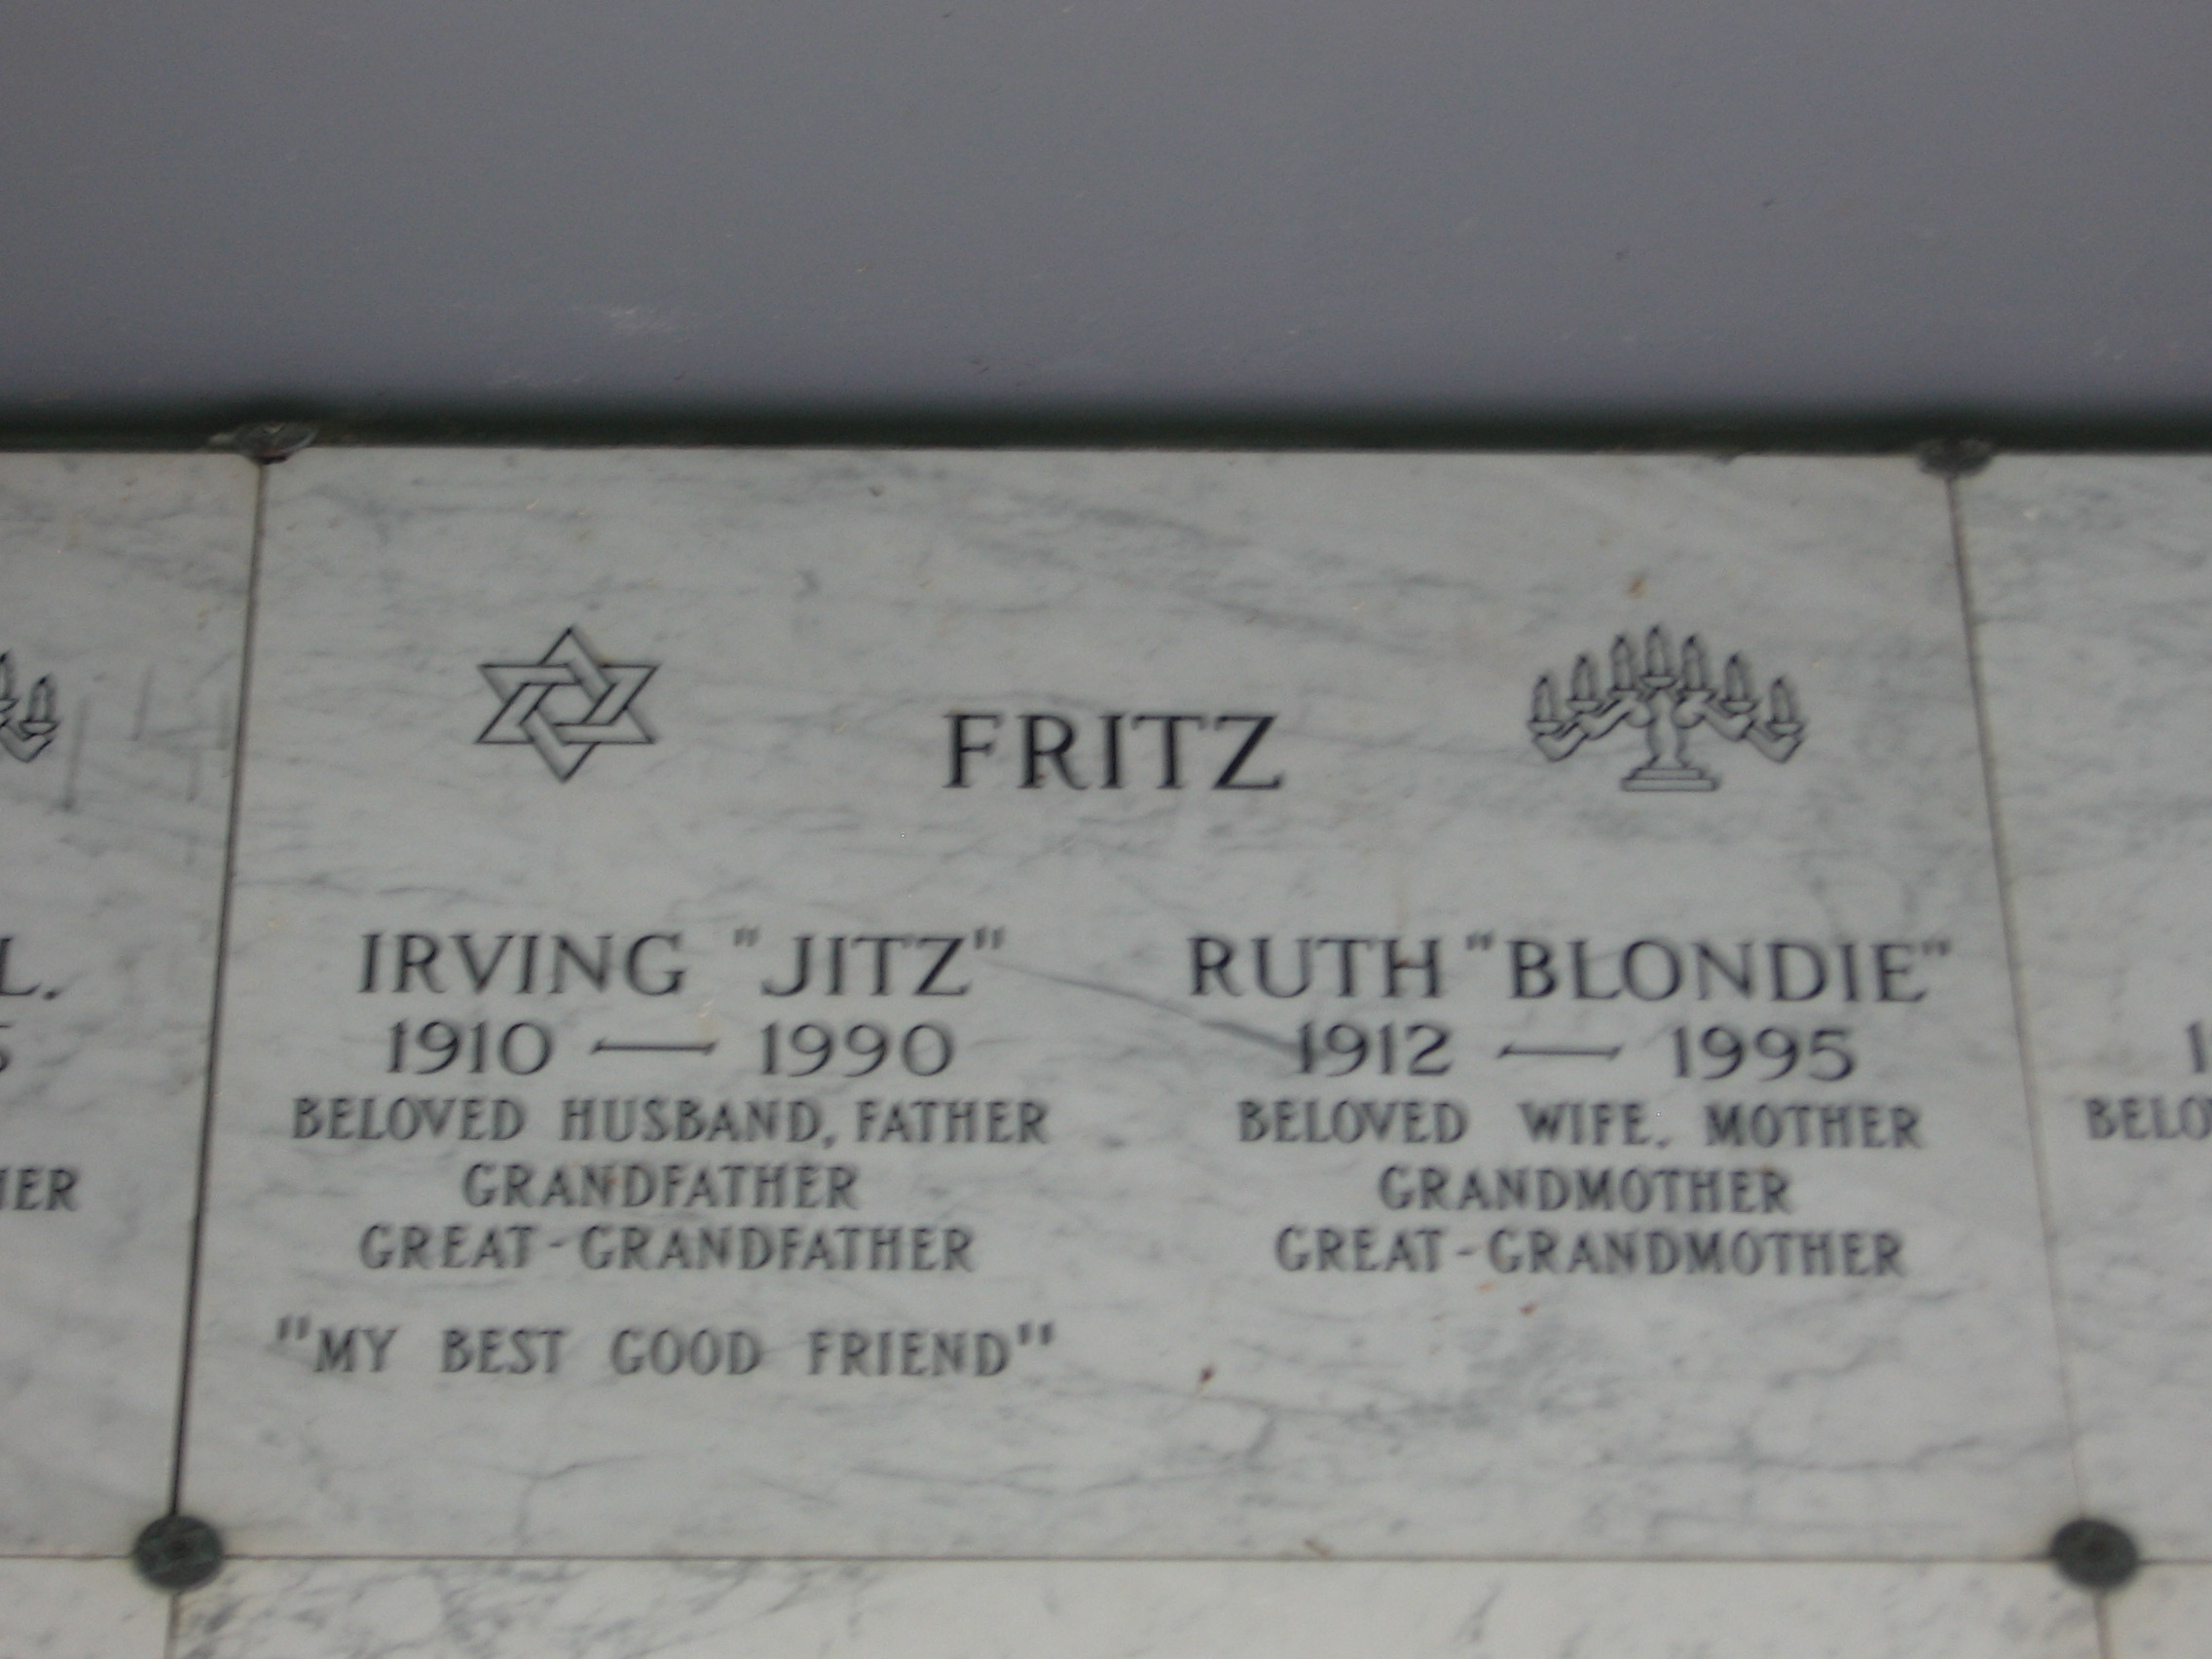 Irving "Jitz" Fritz